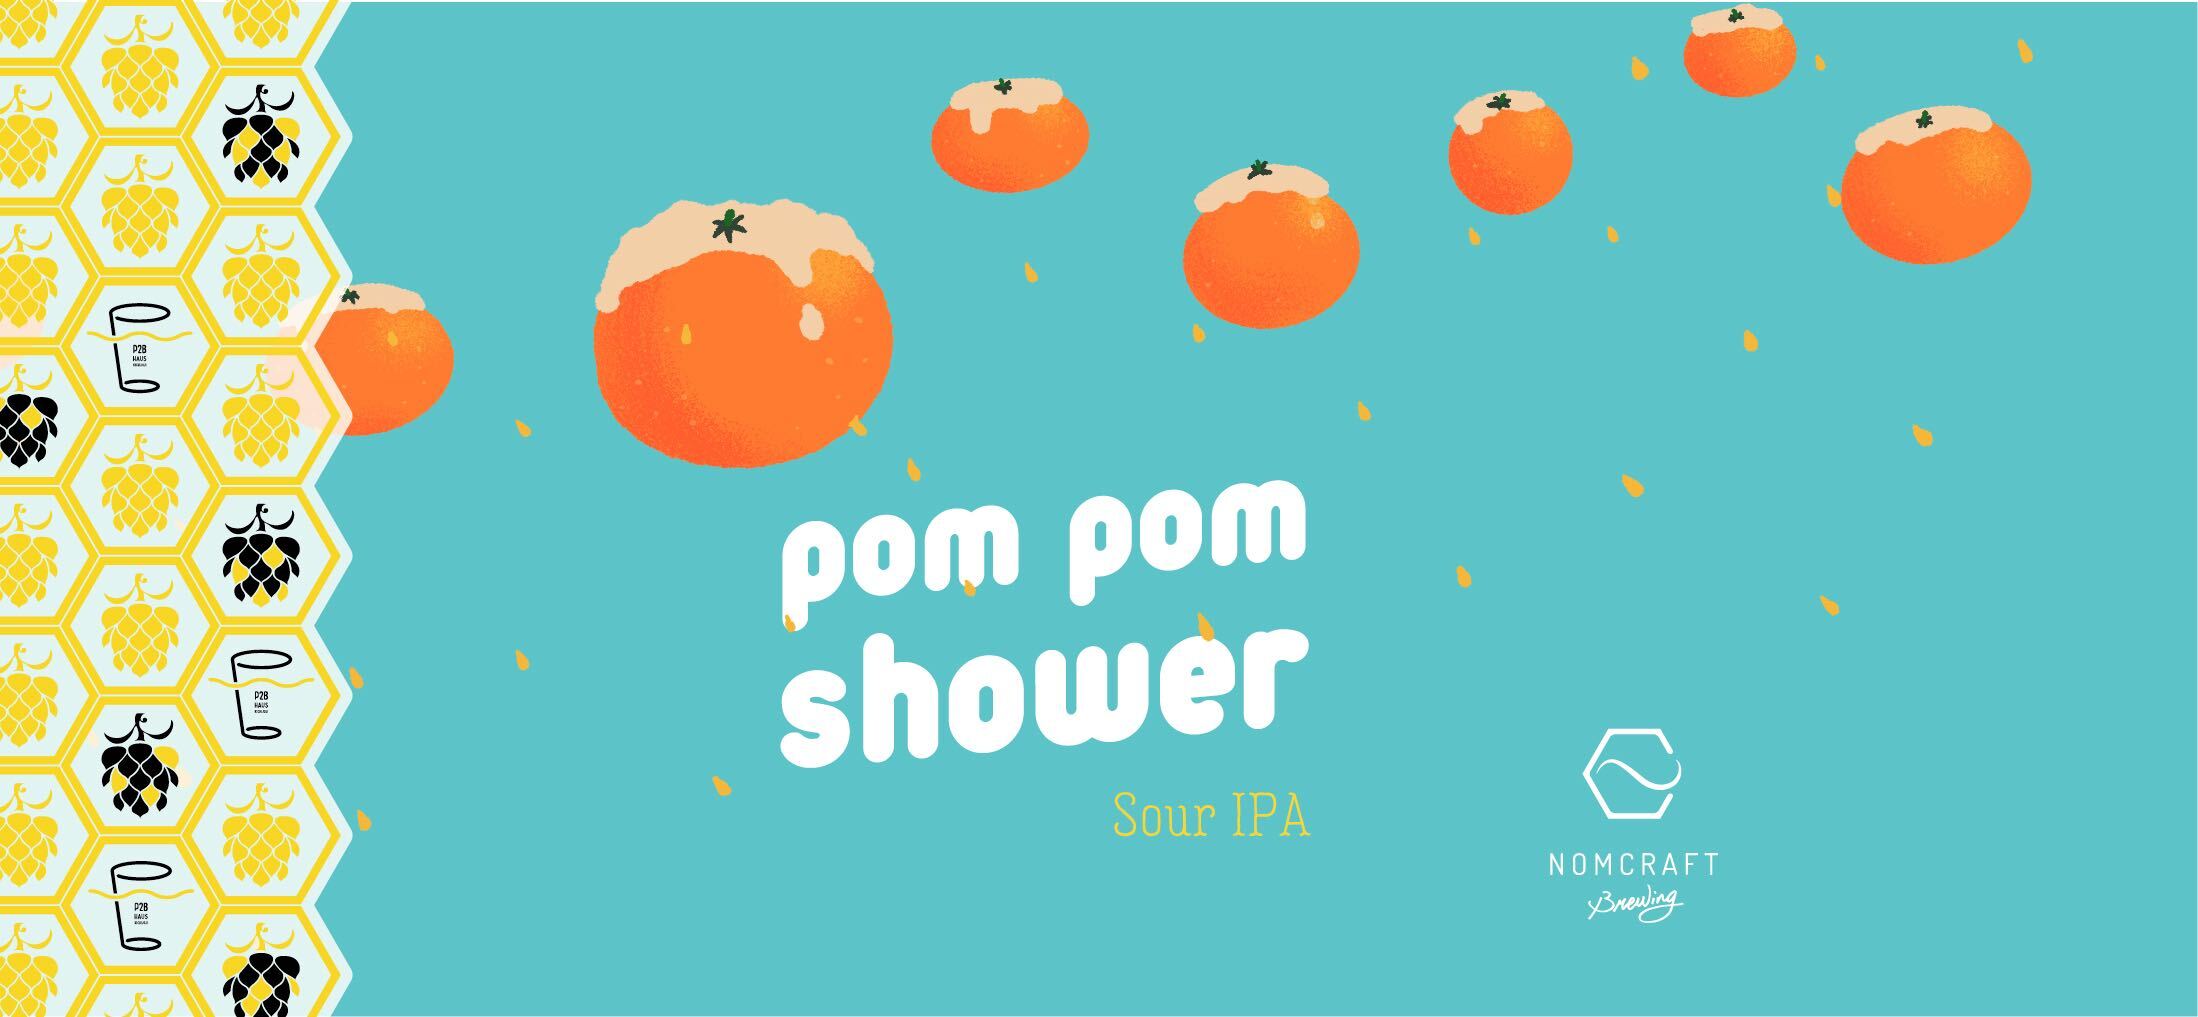 Pom Pom Shower / Sour IPA by Nomcraft Brewing